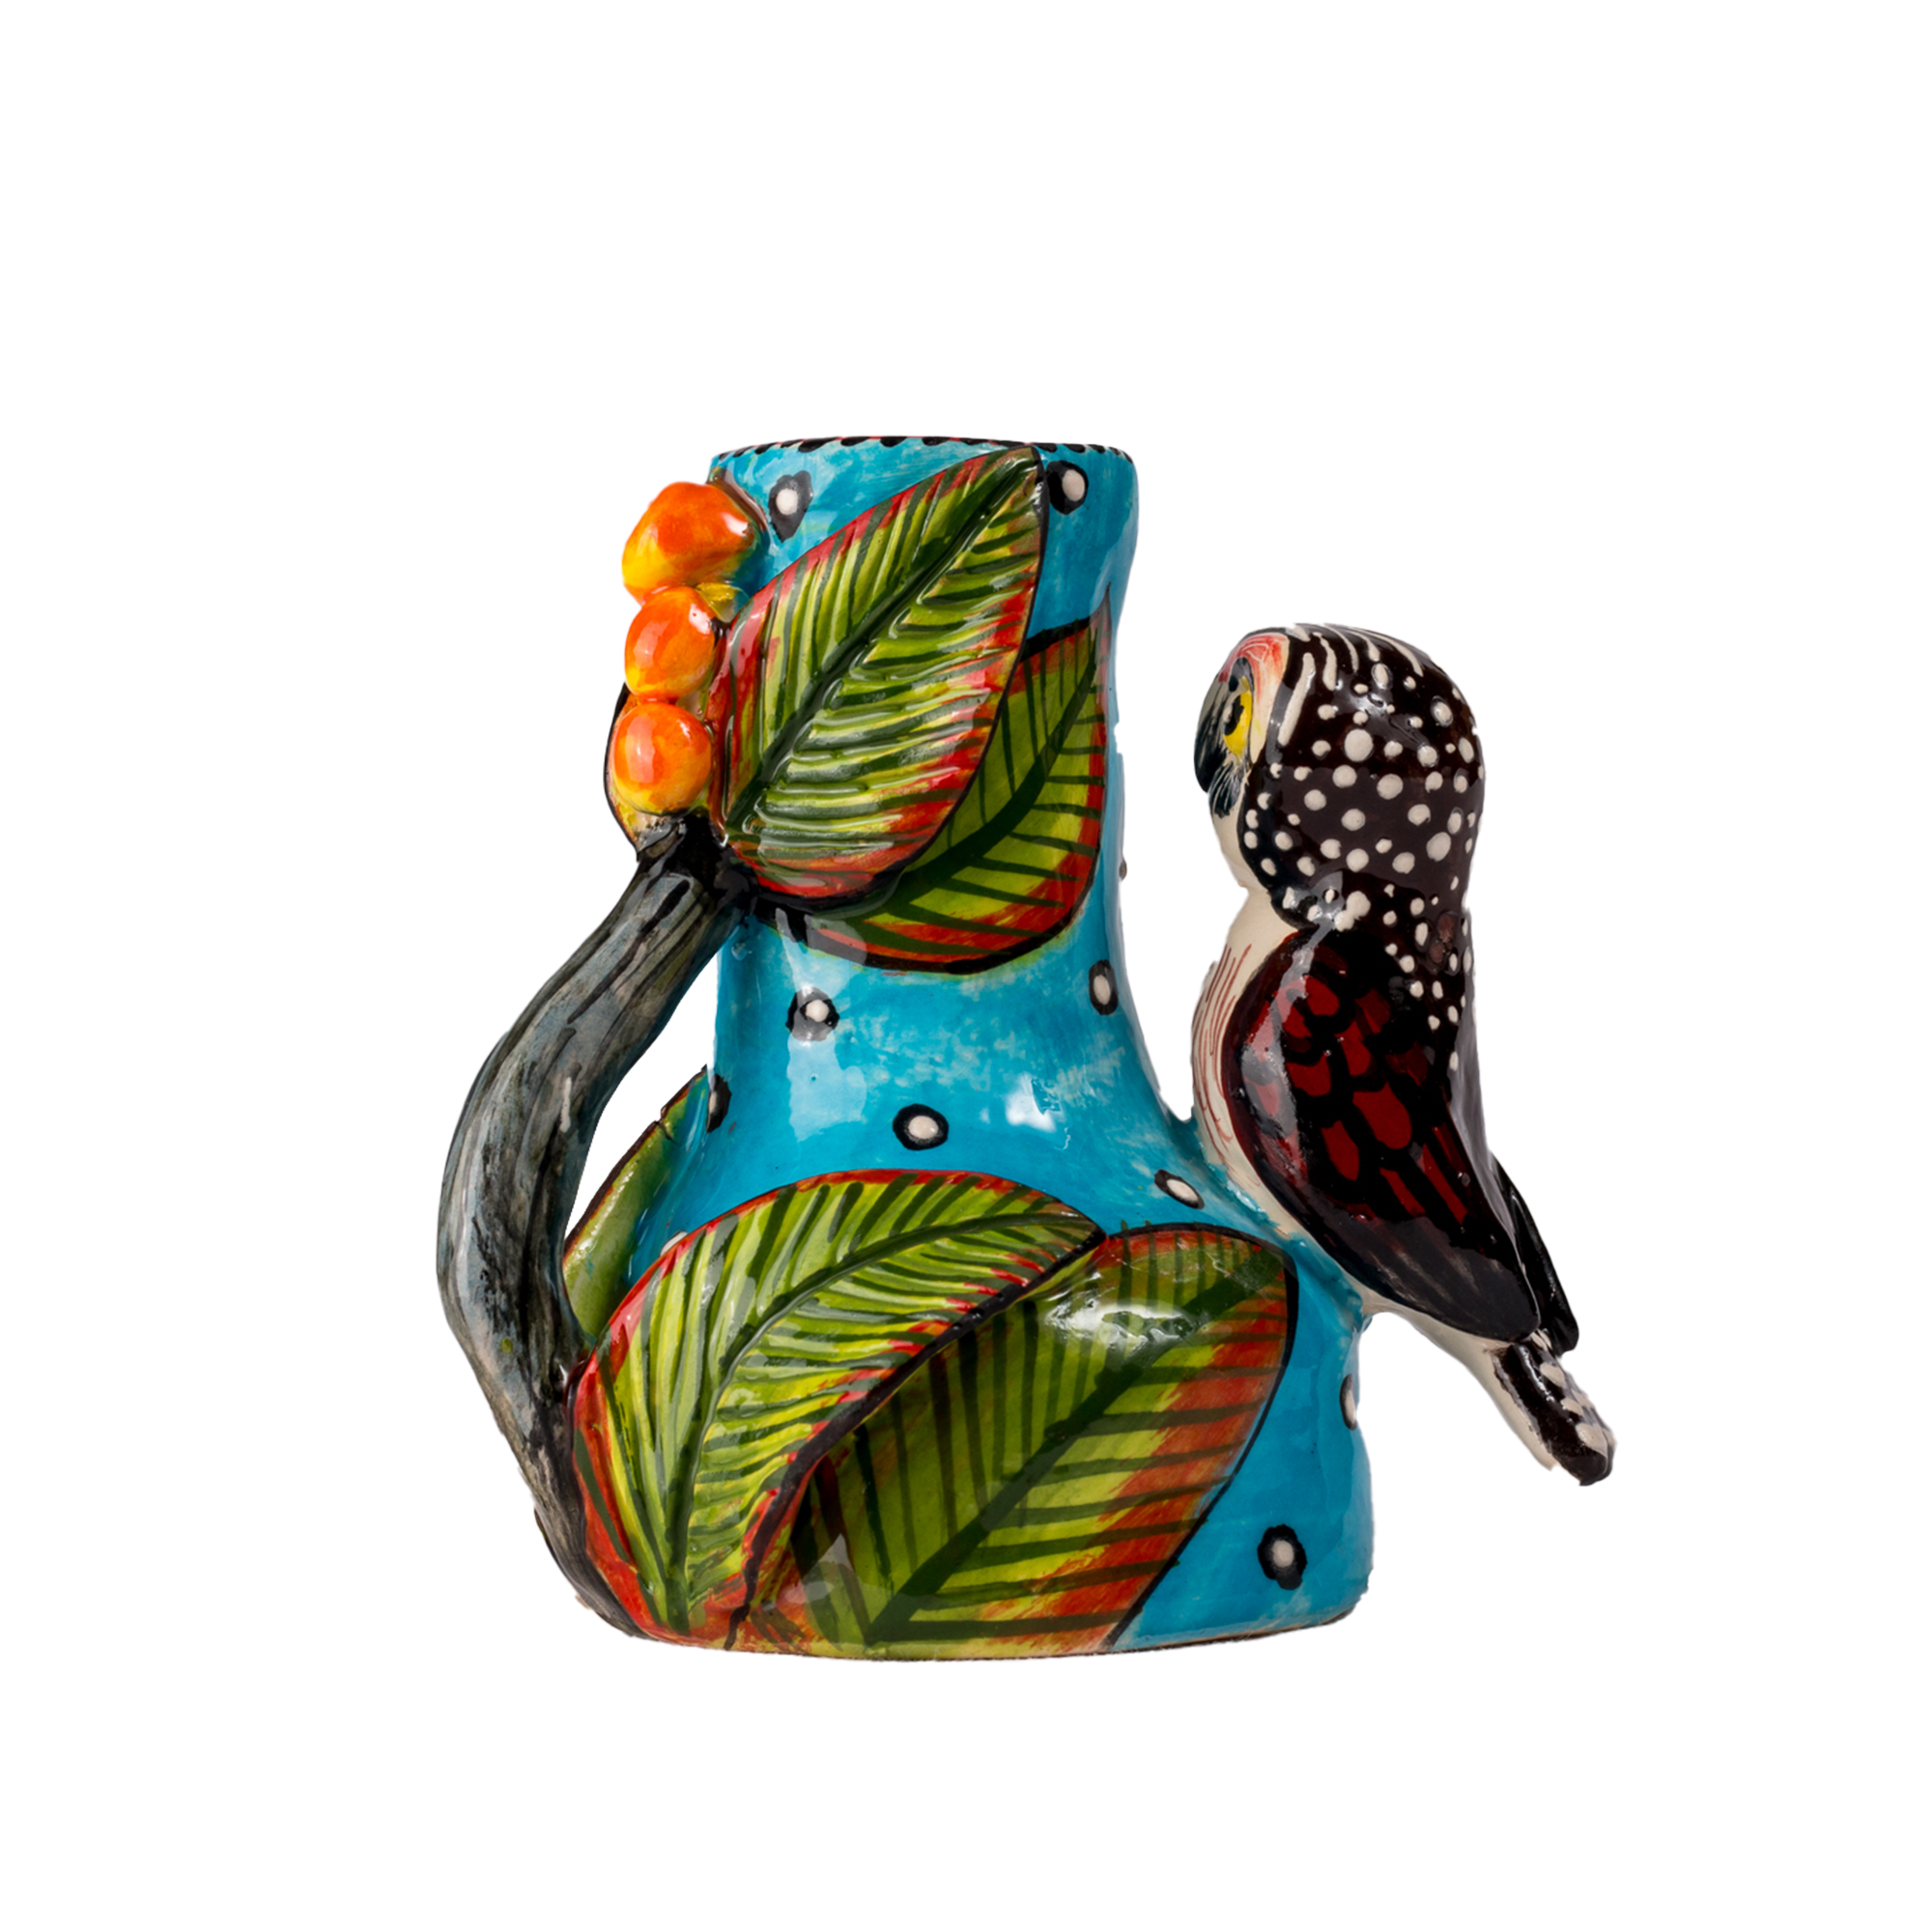 3D Ceramic Owl Candle Holder